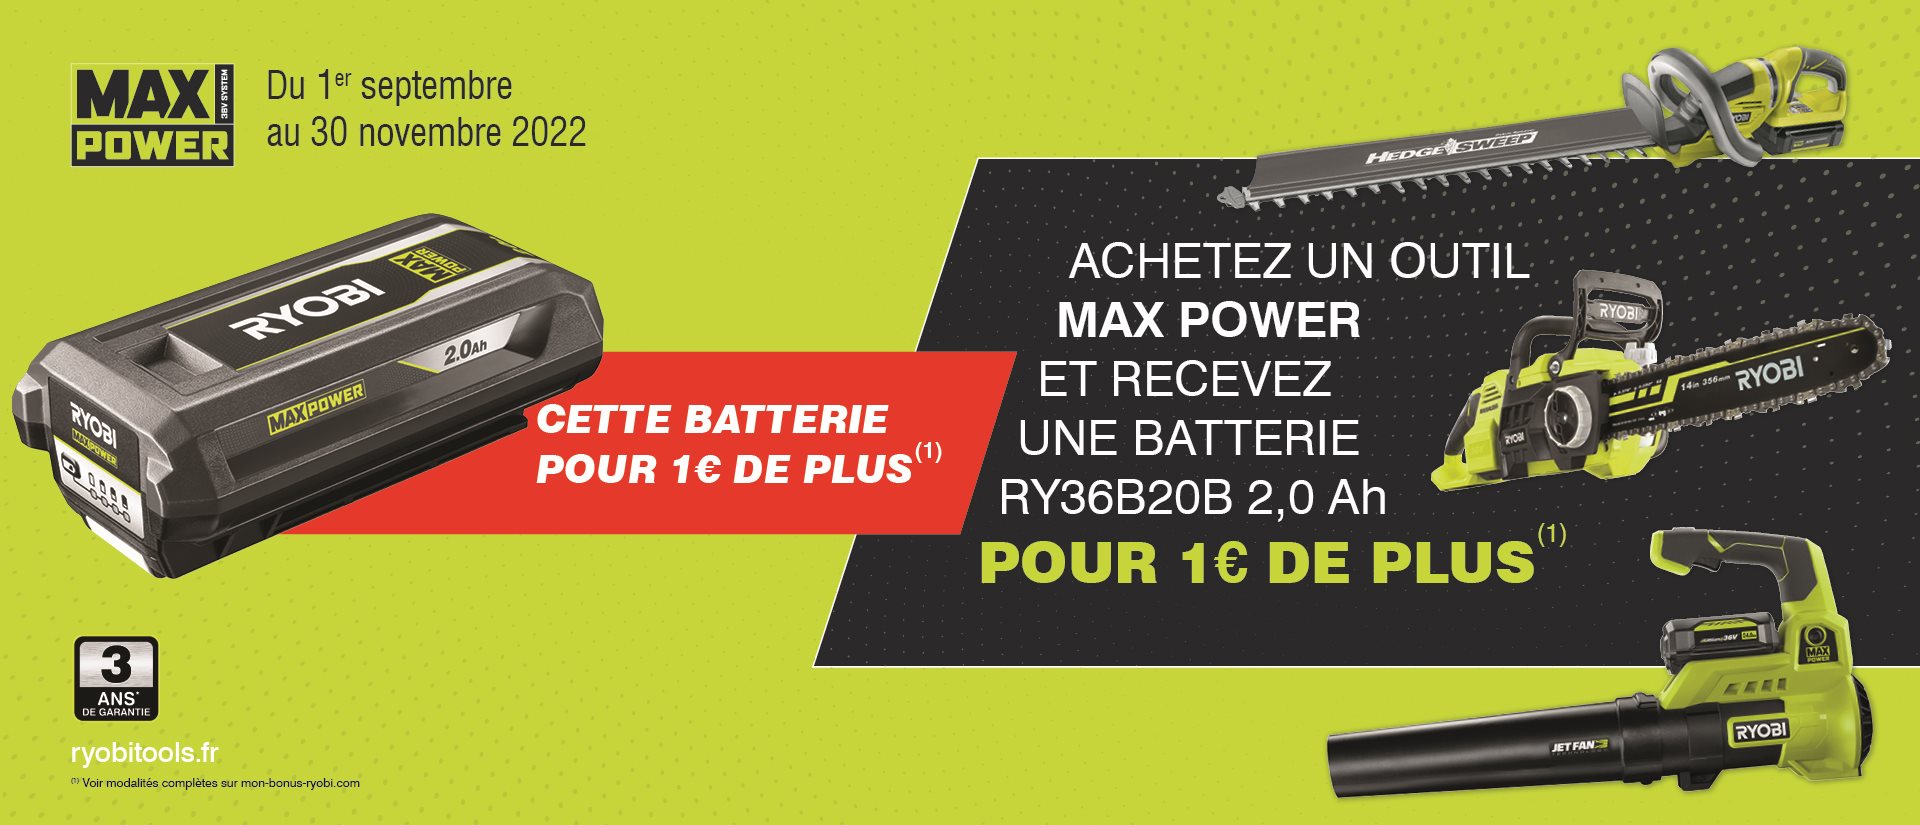 Offre batterie à 1 euro Ryobi MAX POWER